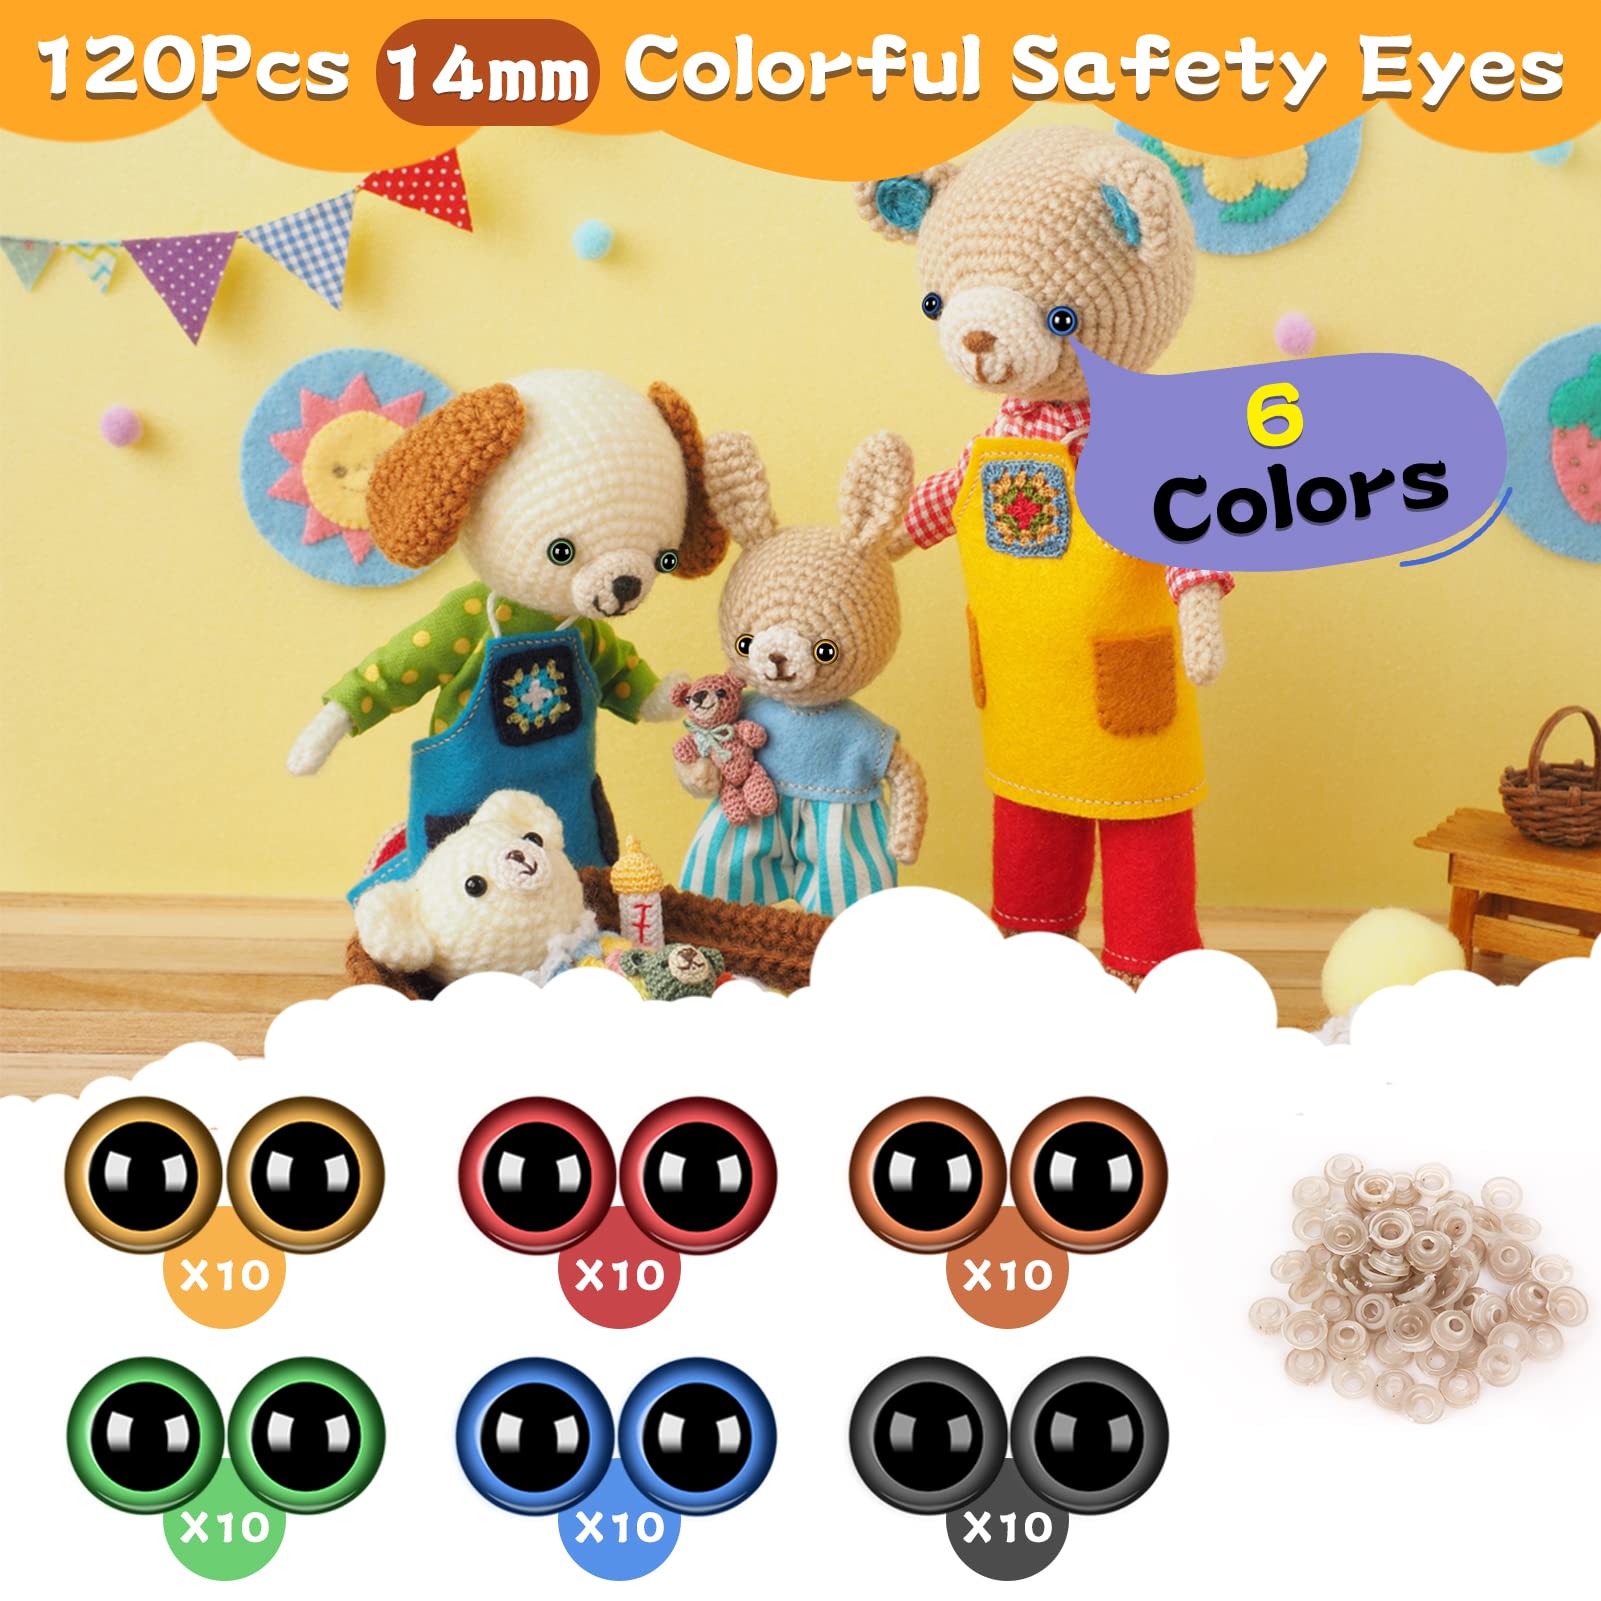 120Pcs/14mm Safety Eyes for Amigurumi Crochet Stuffed Animals Large Safety Eyes with Washers, Big Crochet Amigurumi Stuffed Animals Safety Eyes for Teddy Bear Stuffed Toy Doll Plush Animal (6 Colors)